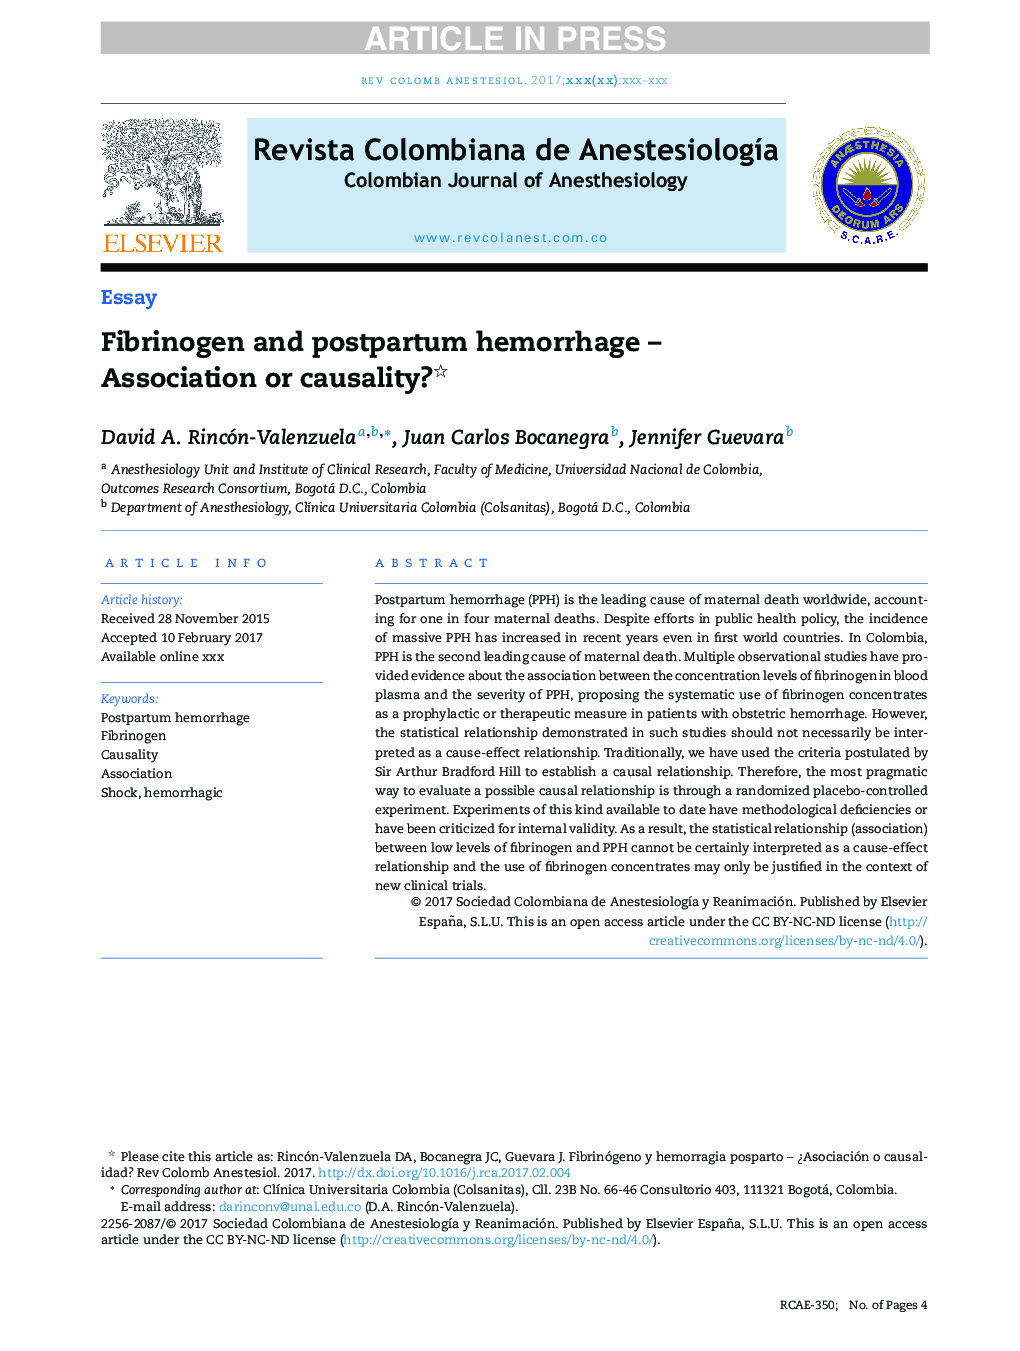 Fibrinogen and postpartum hemorrhage - Association or causality?